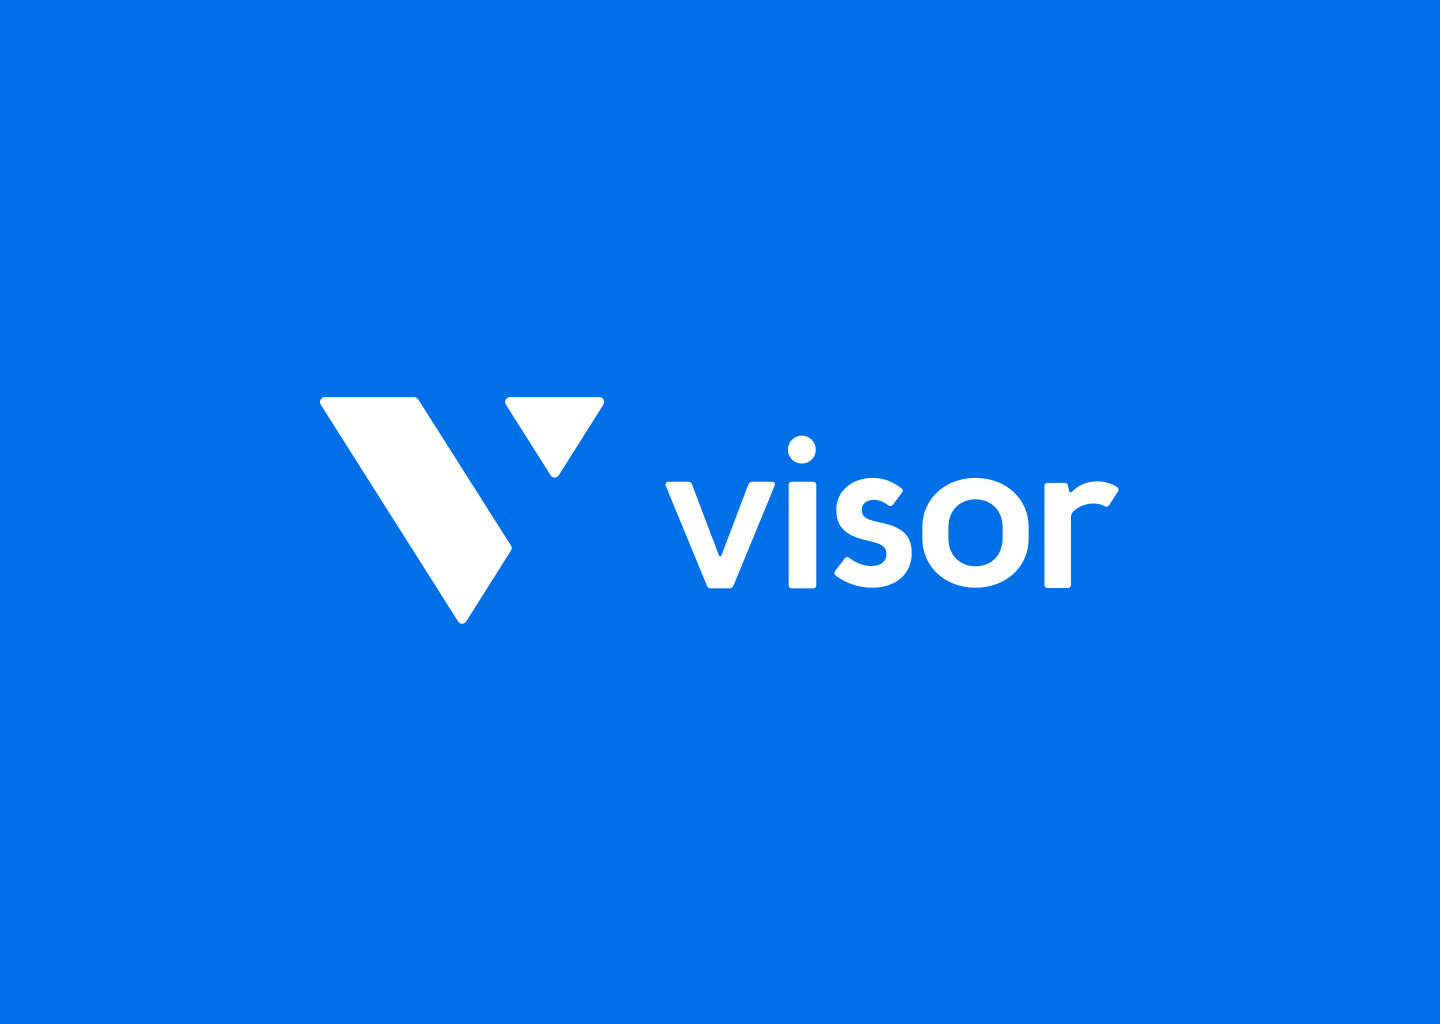 , Pitching a $99 tax advisory service for the masses, Visor has raised $9 million, #Bizwhiznetwork.com Innovation ΛＩ